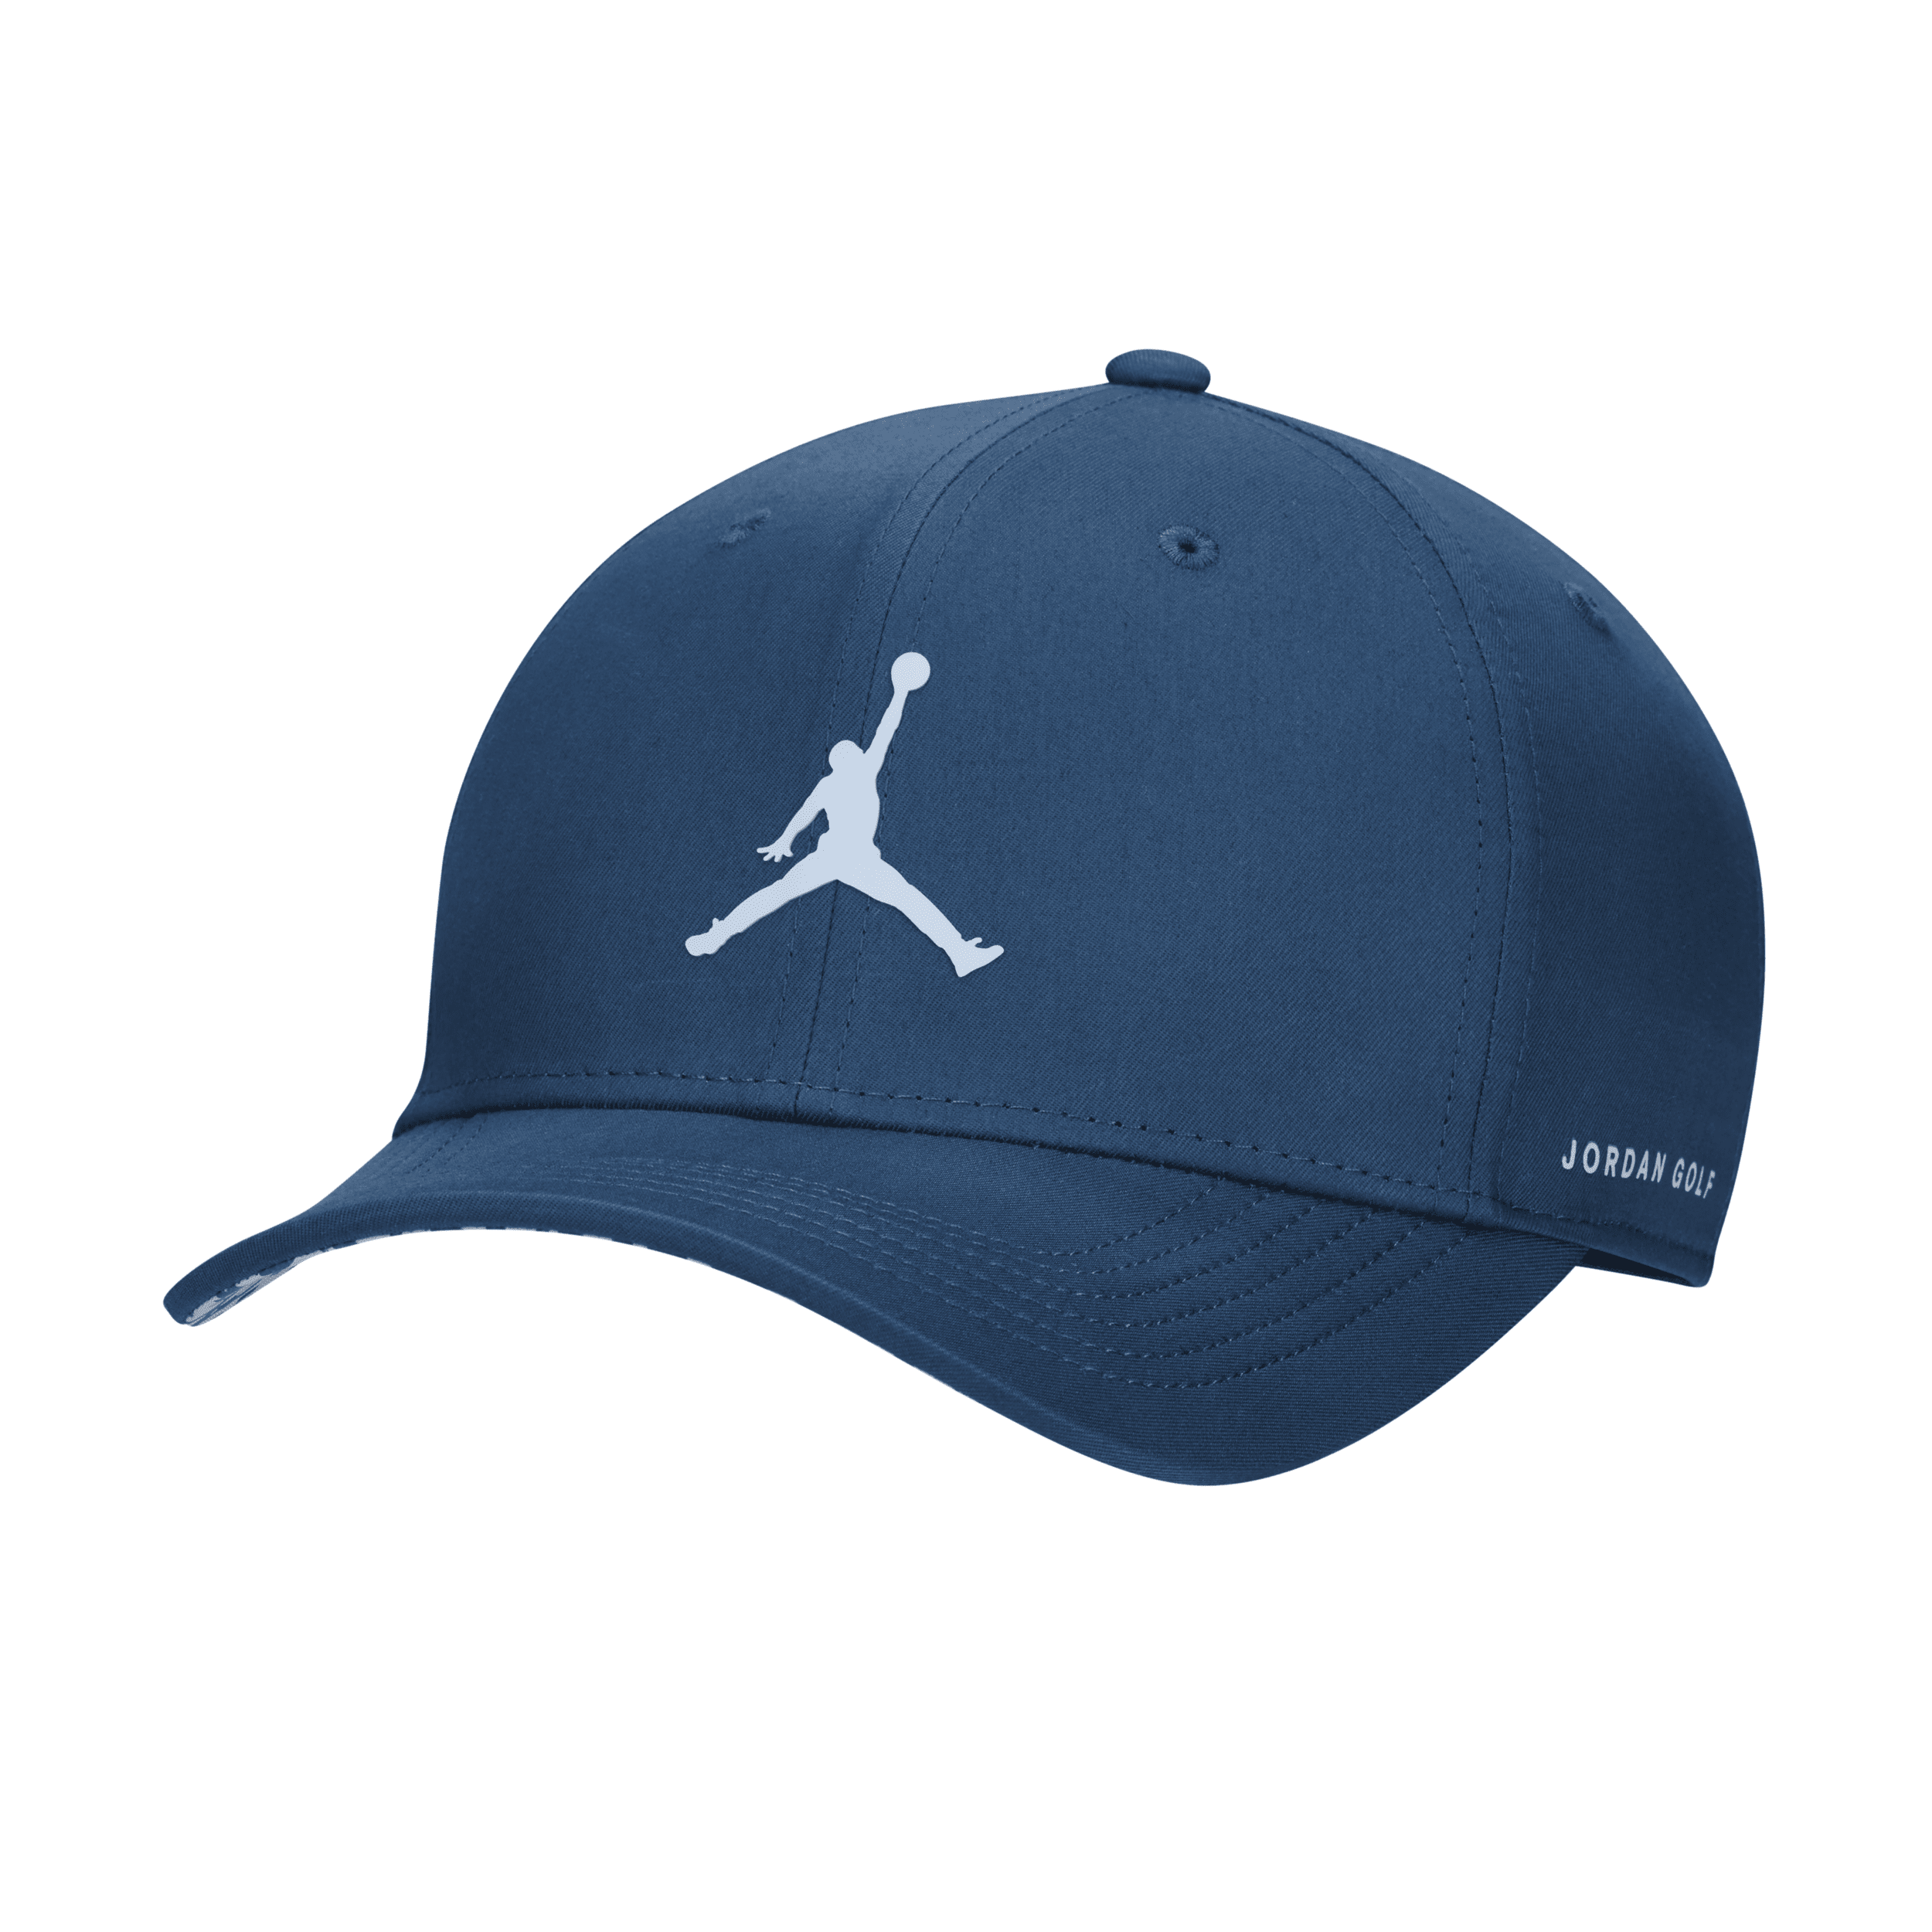 Jordan Golf Rise Cap Adjustable Structured Hat In Blue